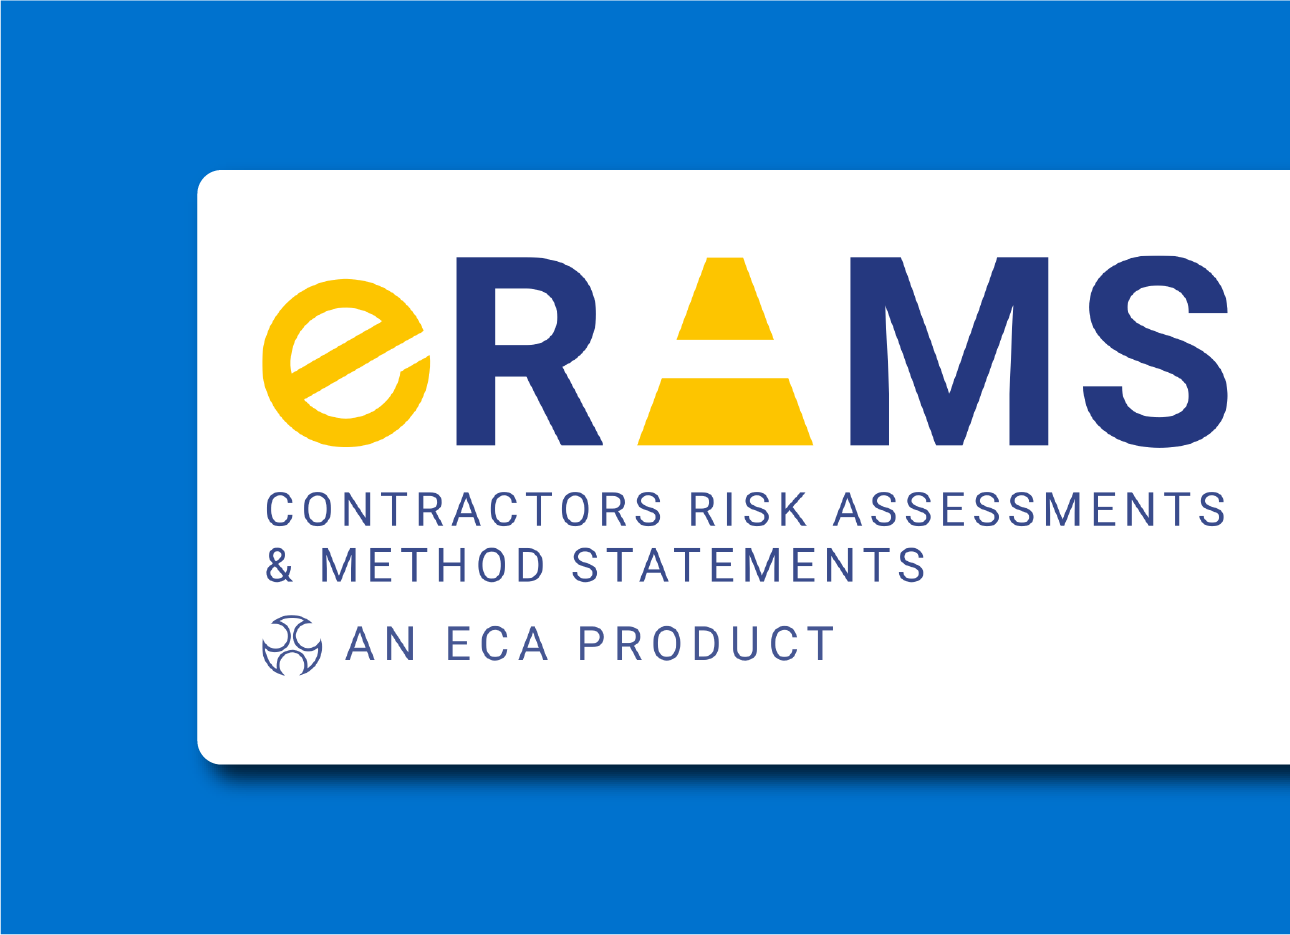 eRAMS software